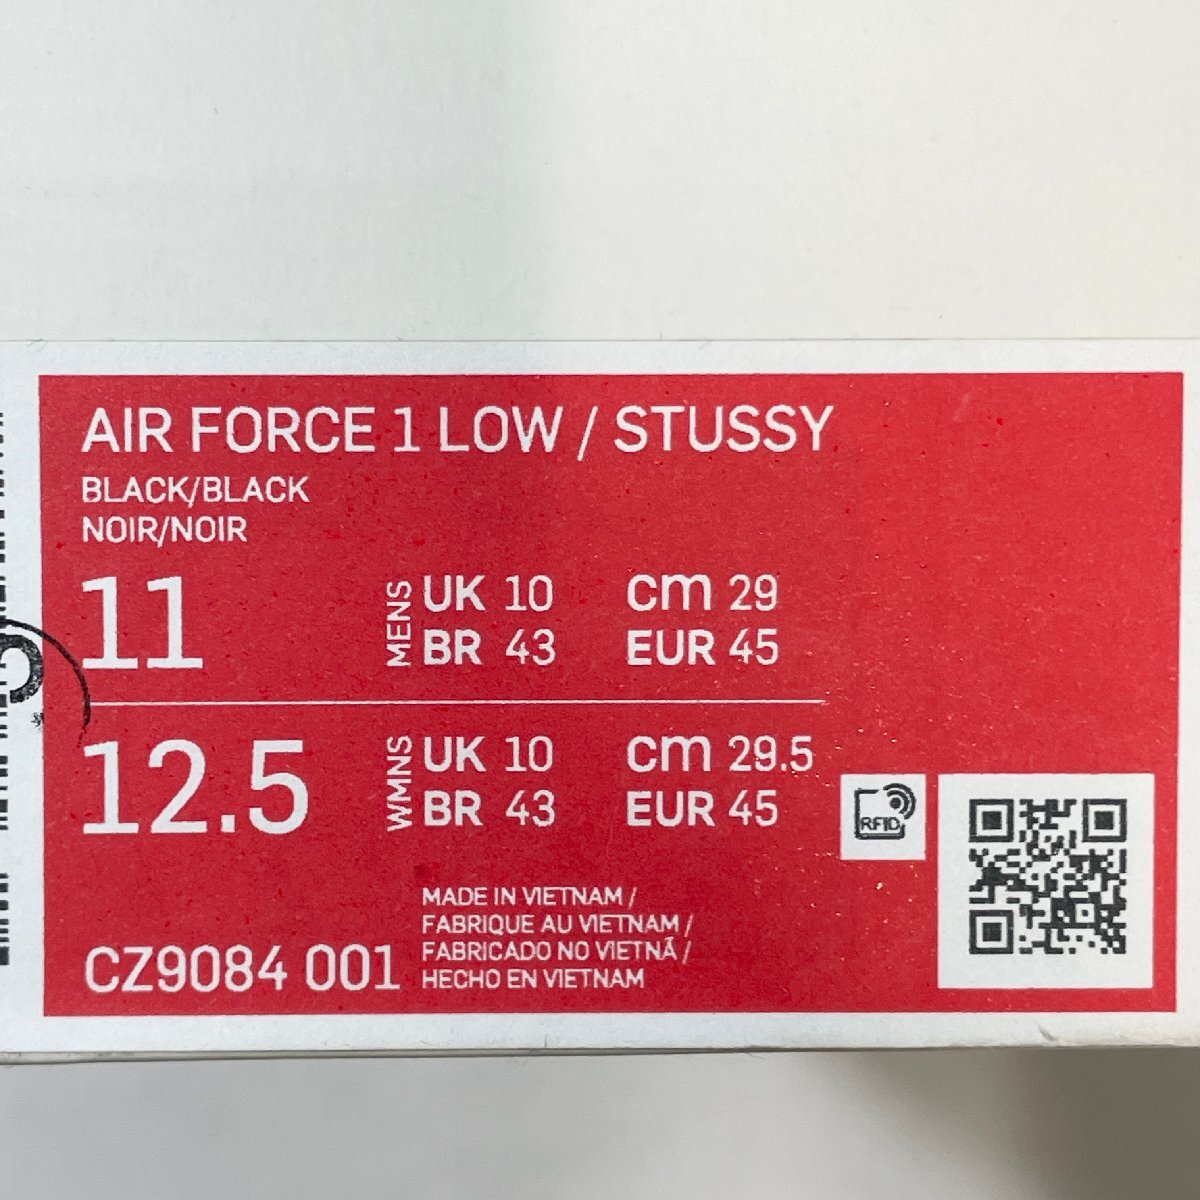 29cm NIKE AIR FORCE 1 LOW /STUSSY CZ9084-001 Nike Air Force 1 low / Stussy black men's sneakers MH H105914